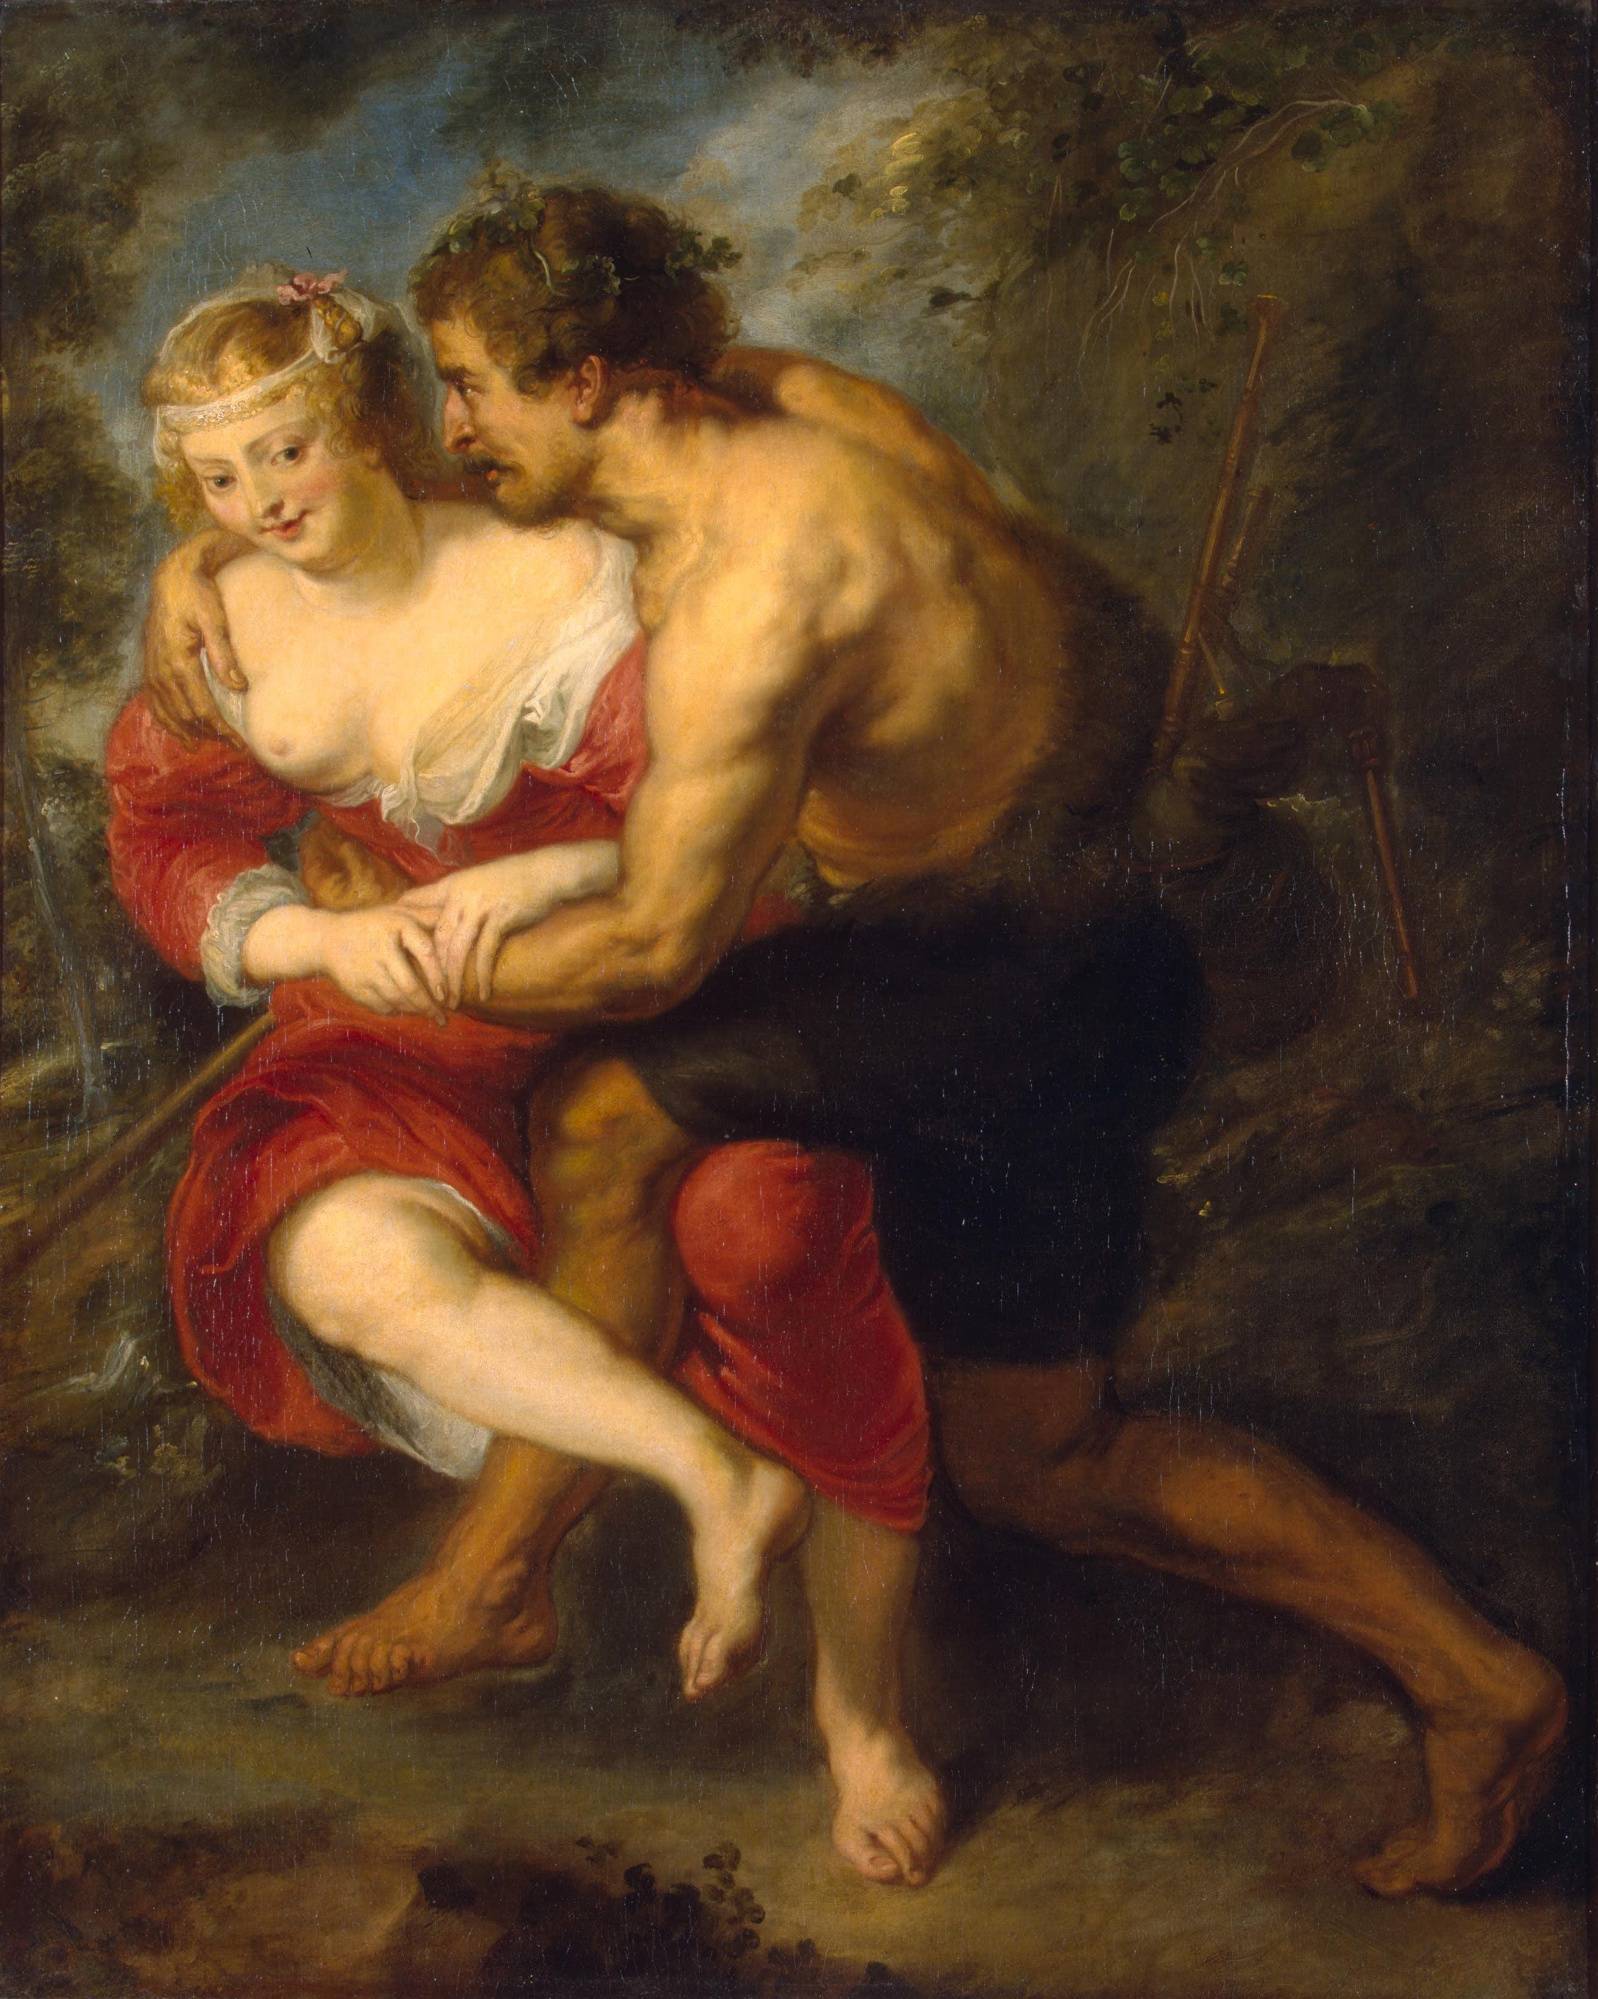 Peter Paul Rubens (1636 and 1638)